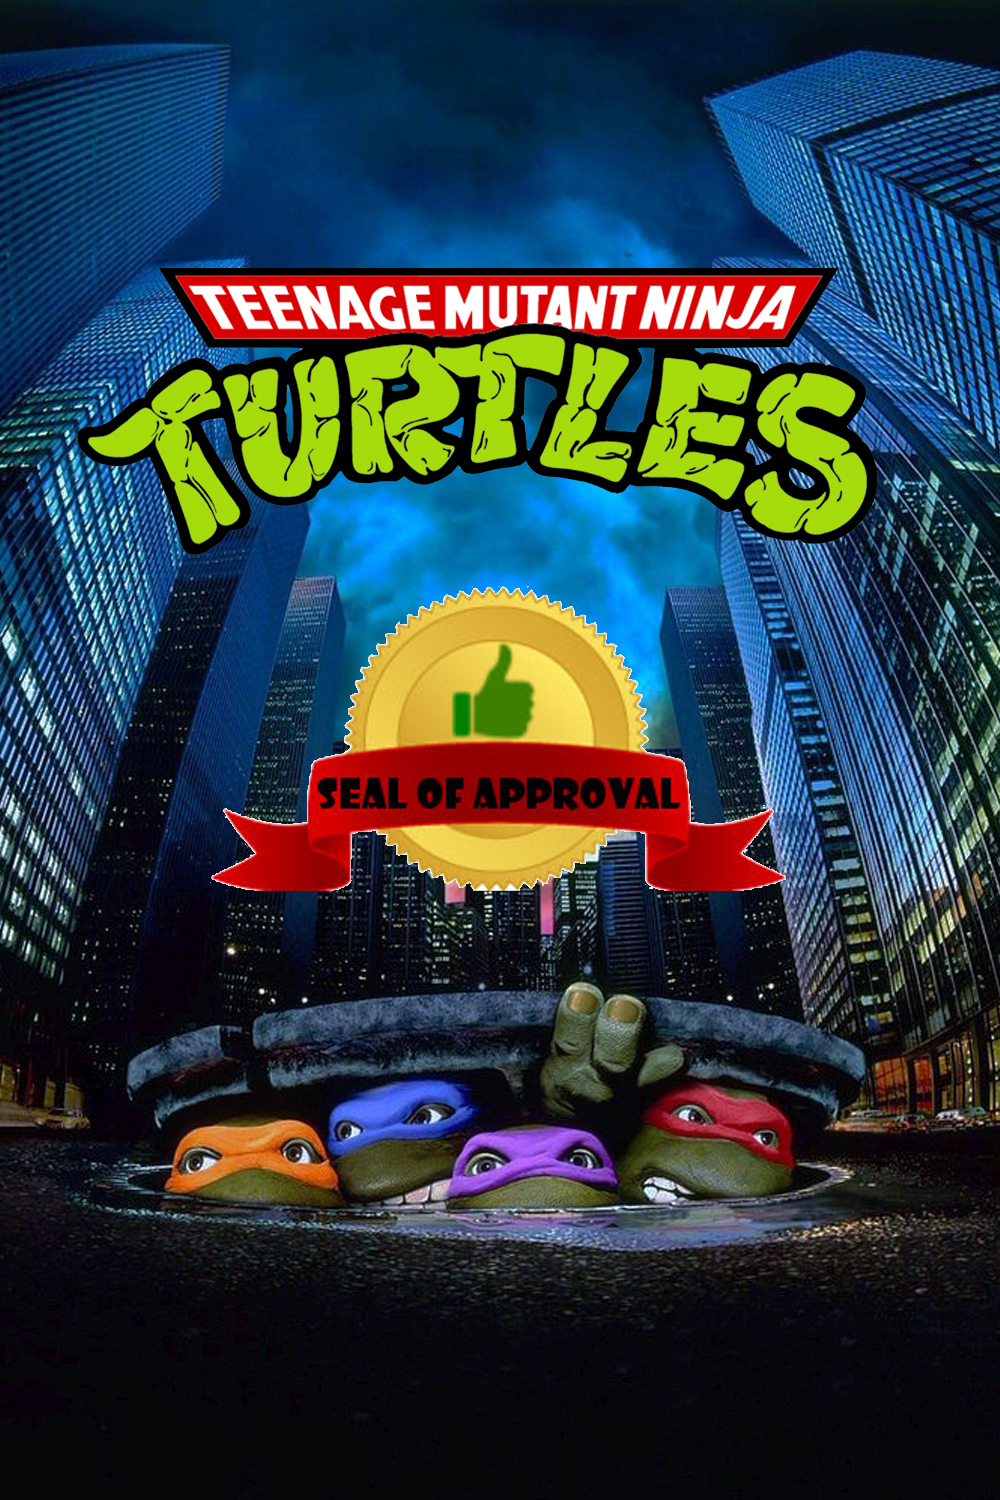 Teenage Mutant Ninja Turtles' review